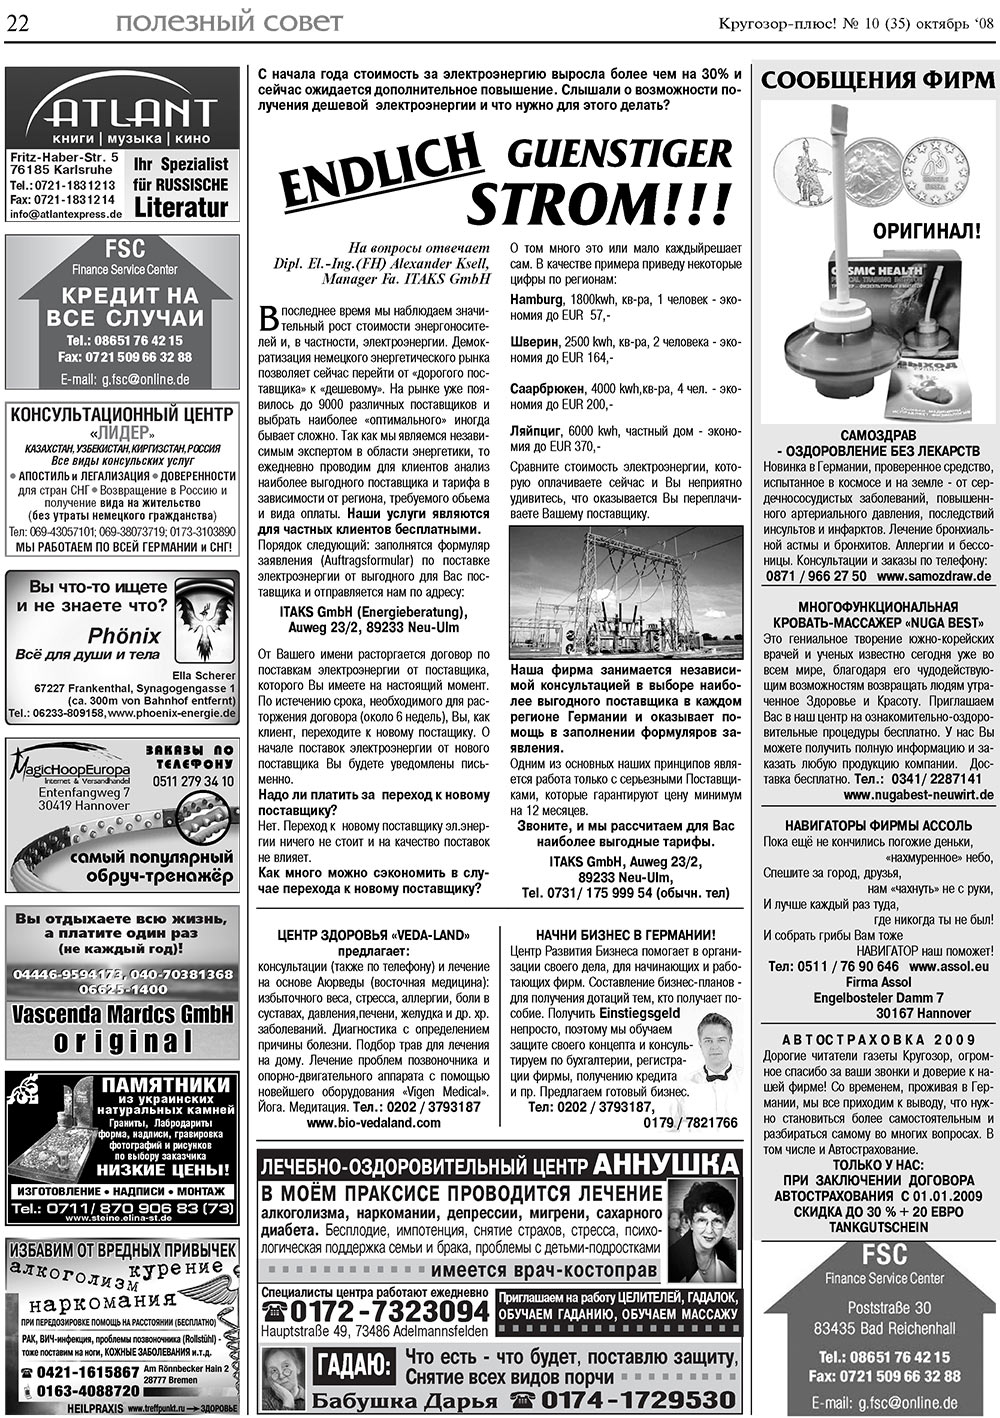 Кругозор плюс! (газета). 2008 год, номер 10, стр. 22